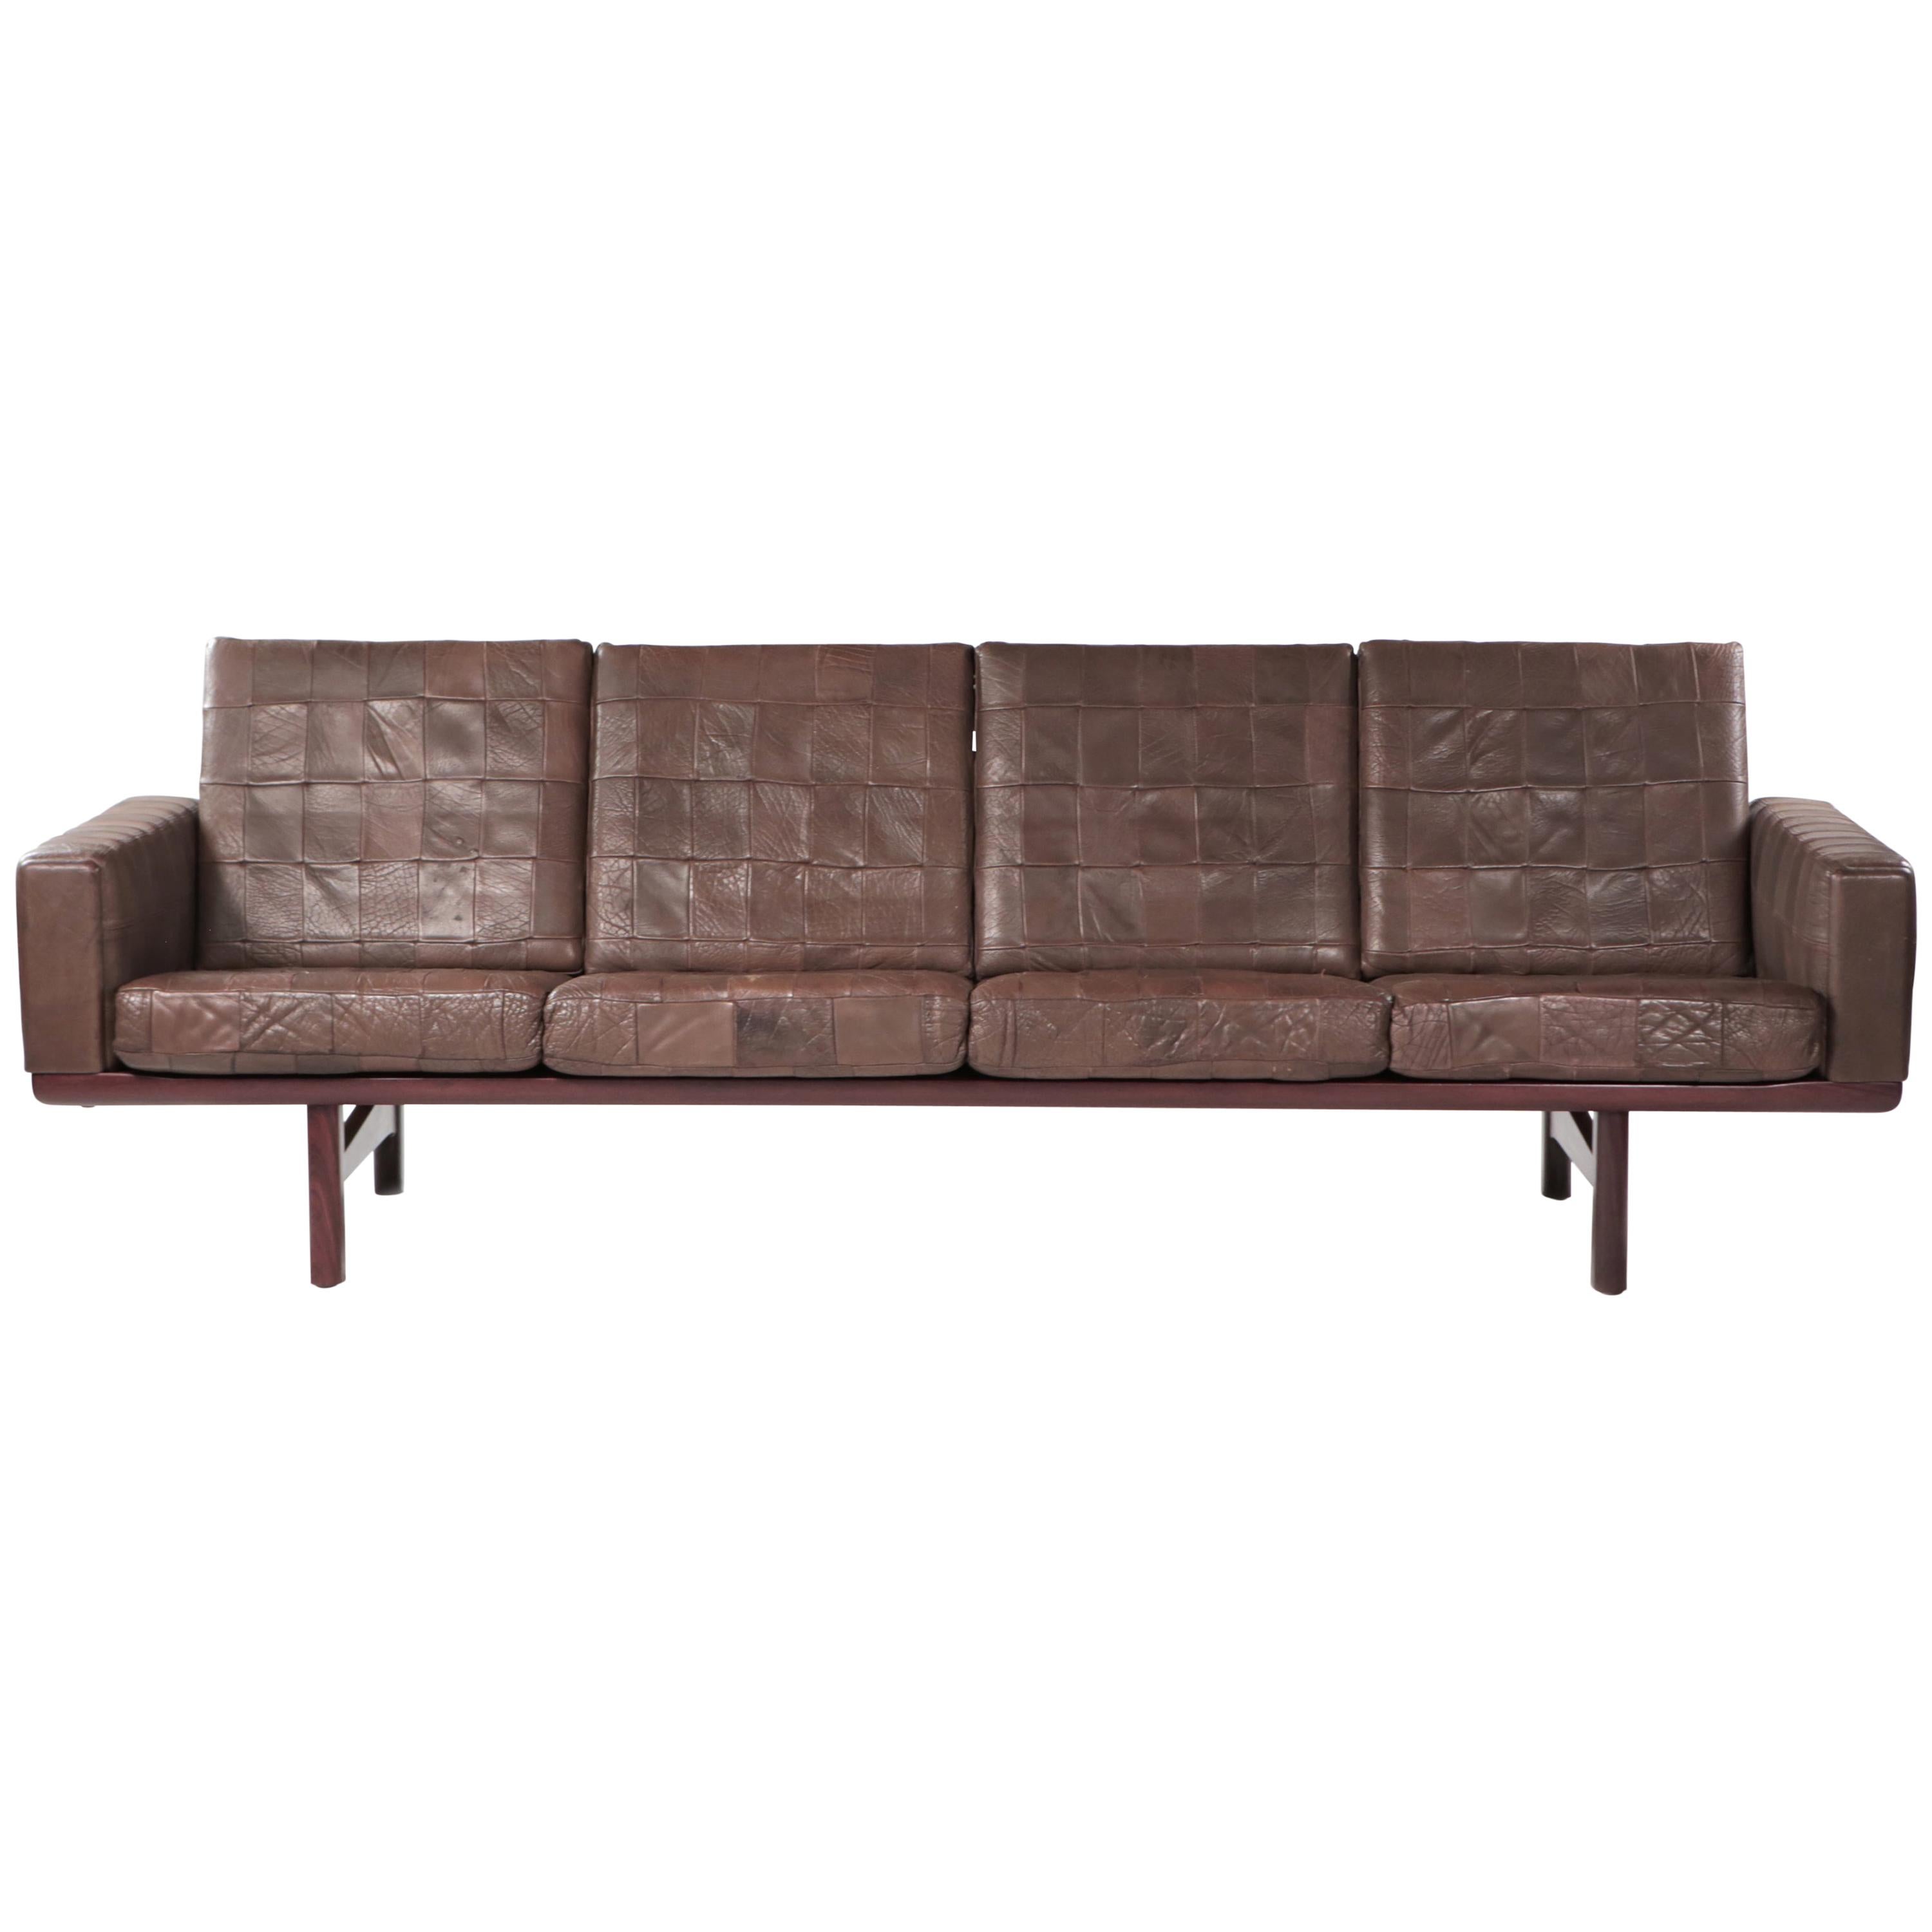 Hans J Wegner "GE236/4" Sofa by GETAMA in Original Patched Leather Denmark 1950s